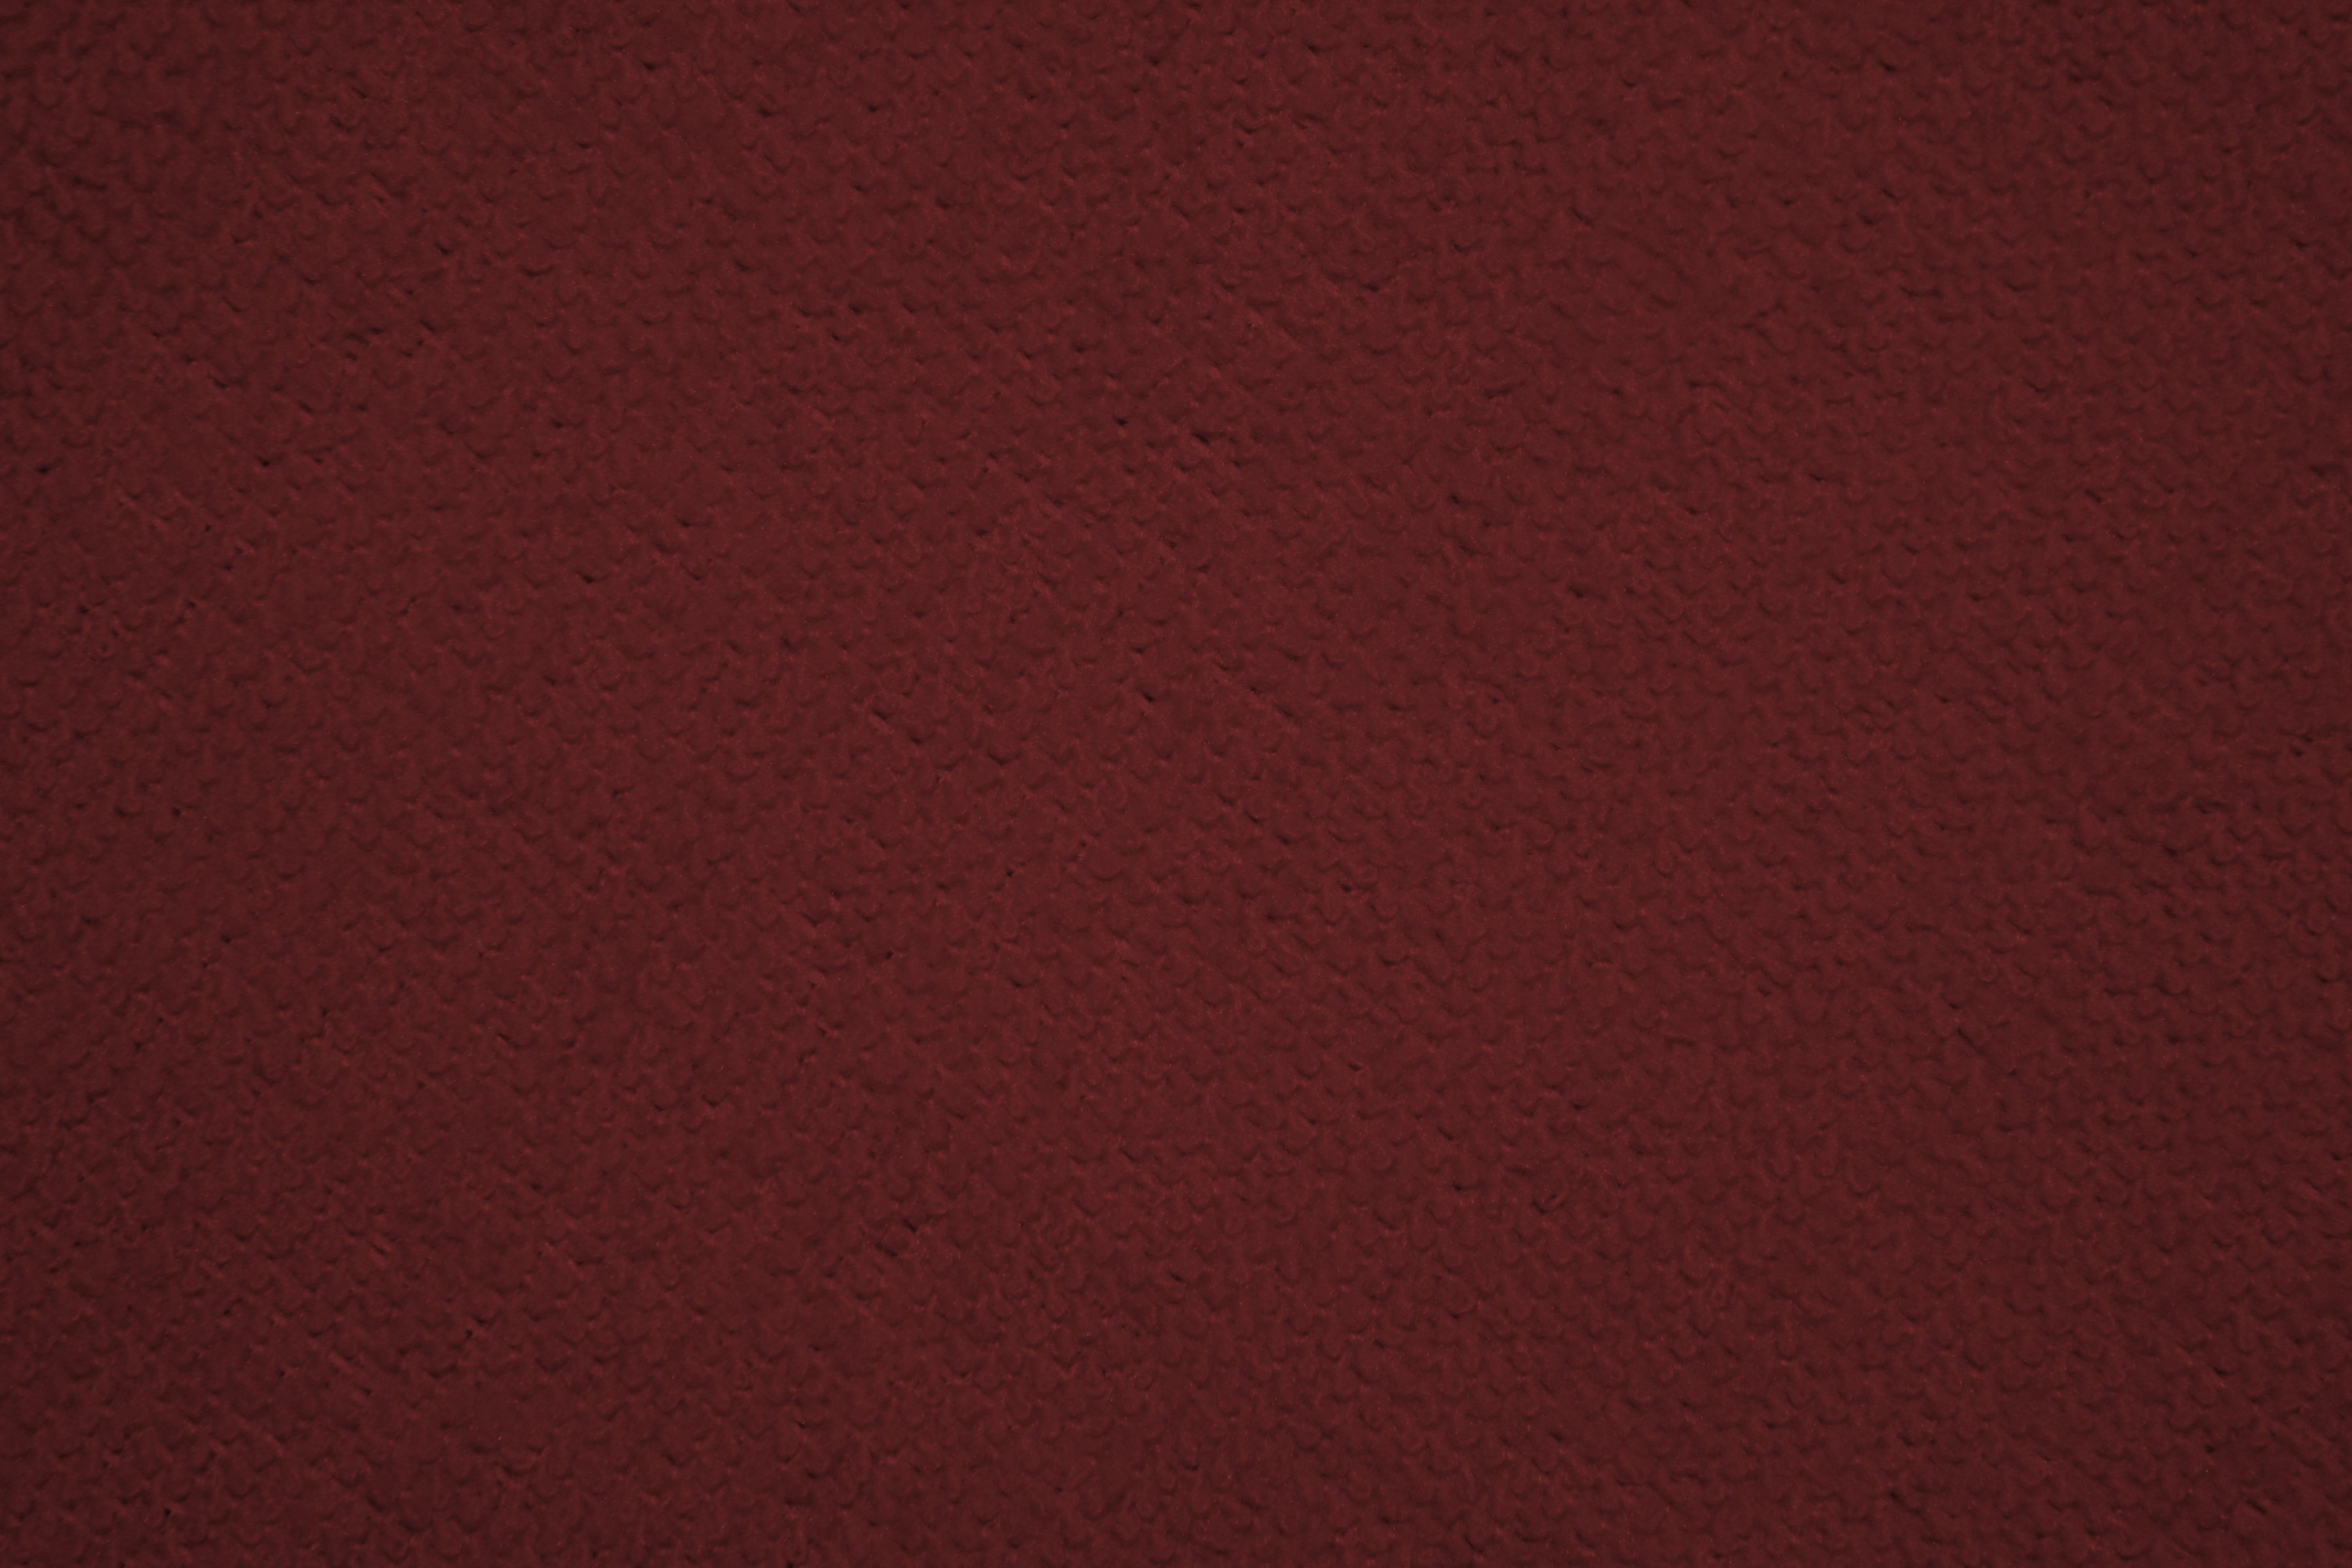 Maroon Microfiber Cloth Fabric Texture Picture | Free Photograph | Photos  Public Domain